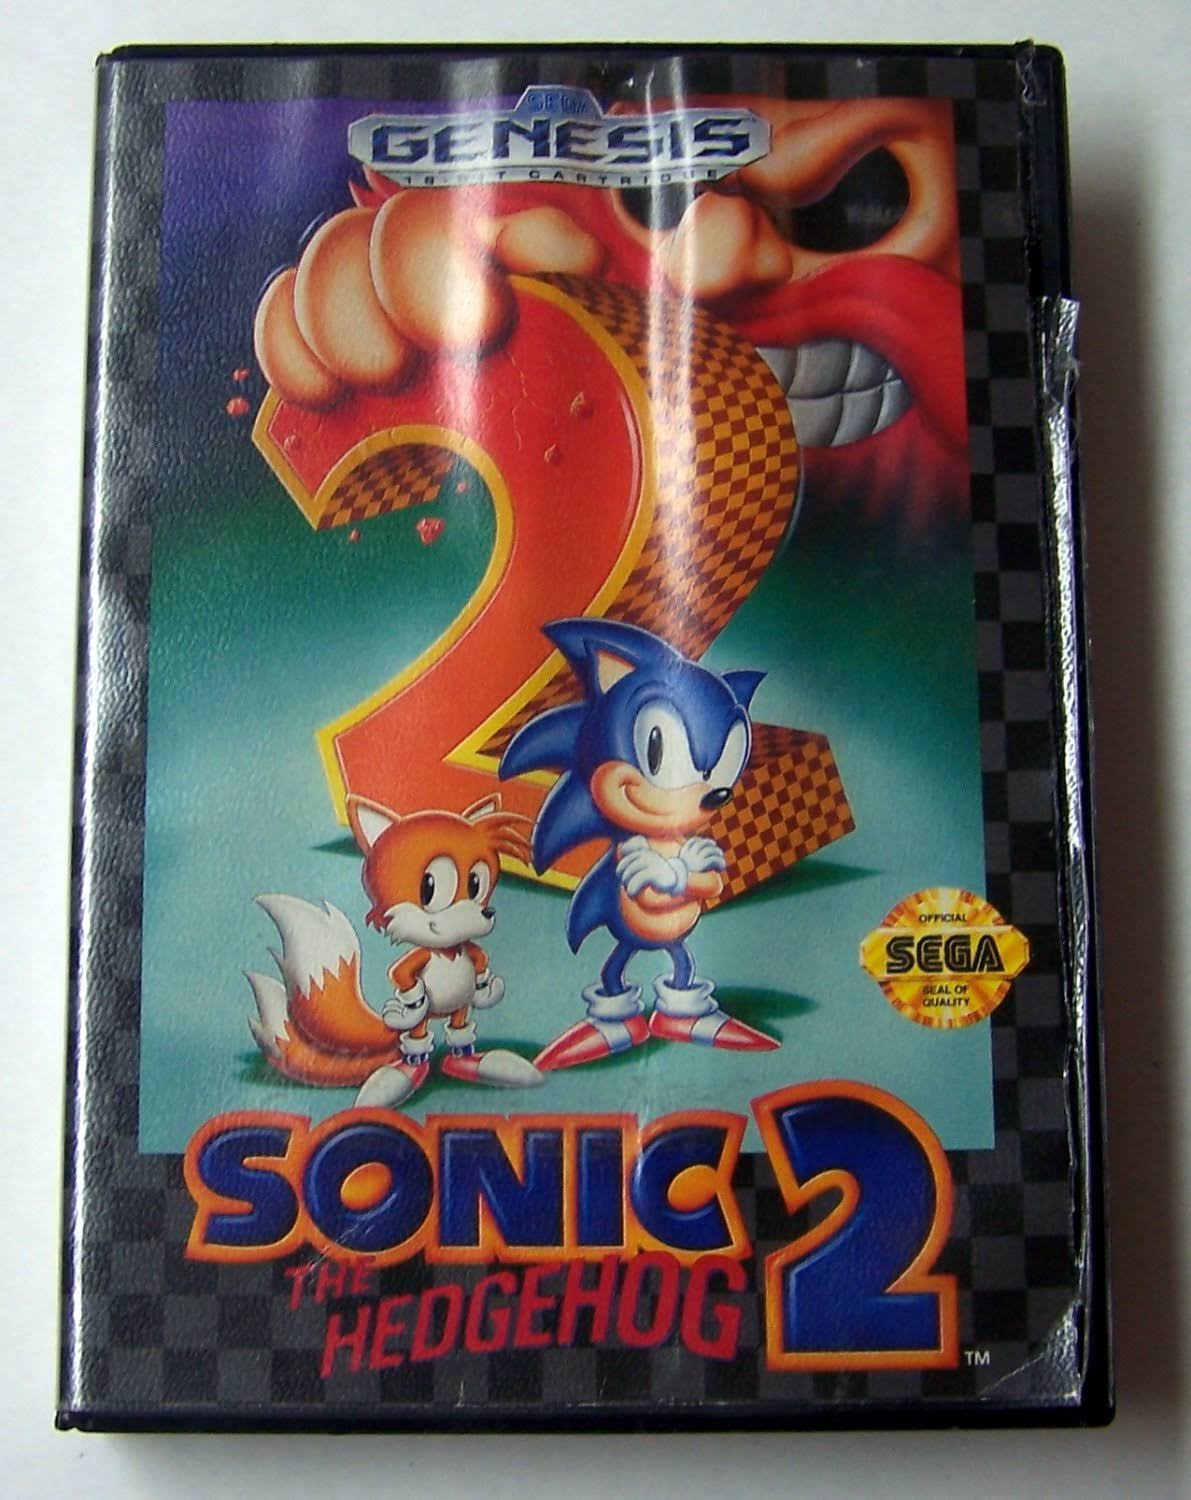 Sonic The Hedgehog 2 - Sega Genesis